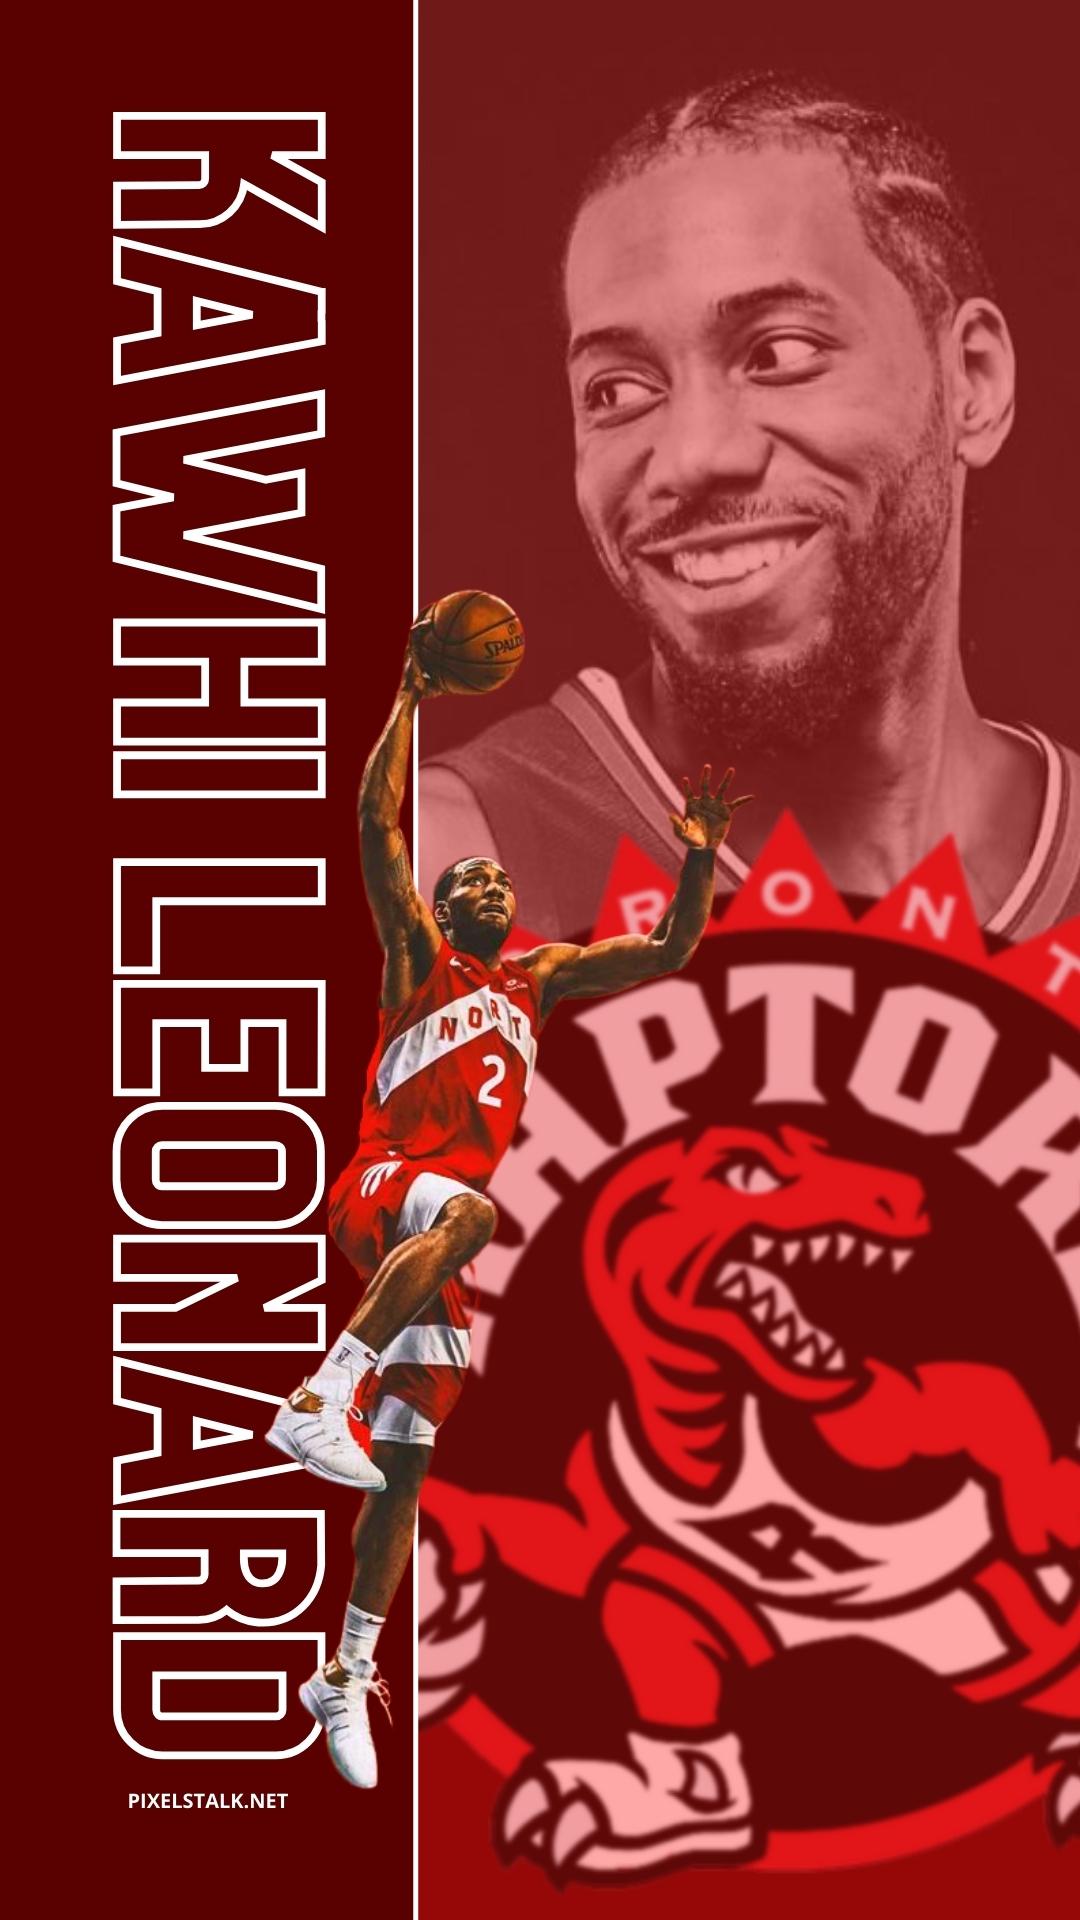 Kawhi Leonard - Basketball & Sports Background Wallpapers on Desktop Nexus  (Image 2491480)